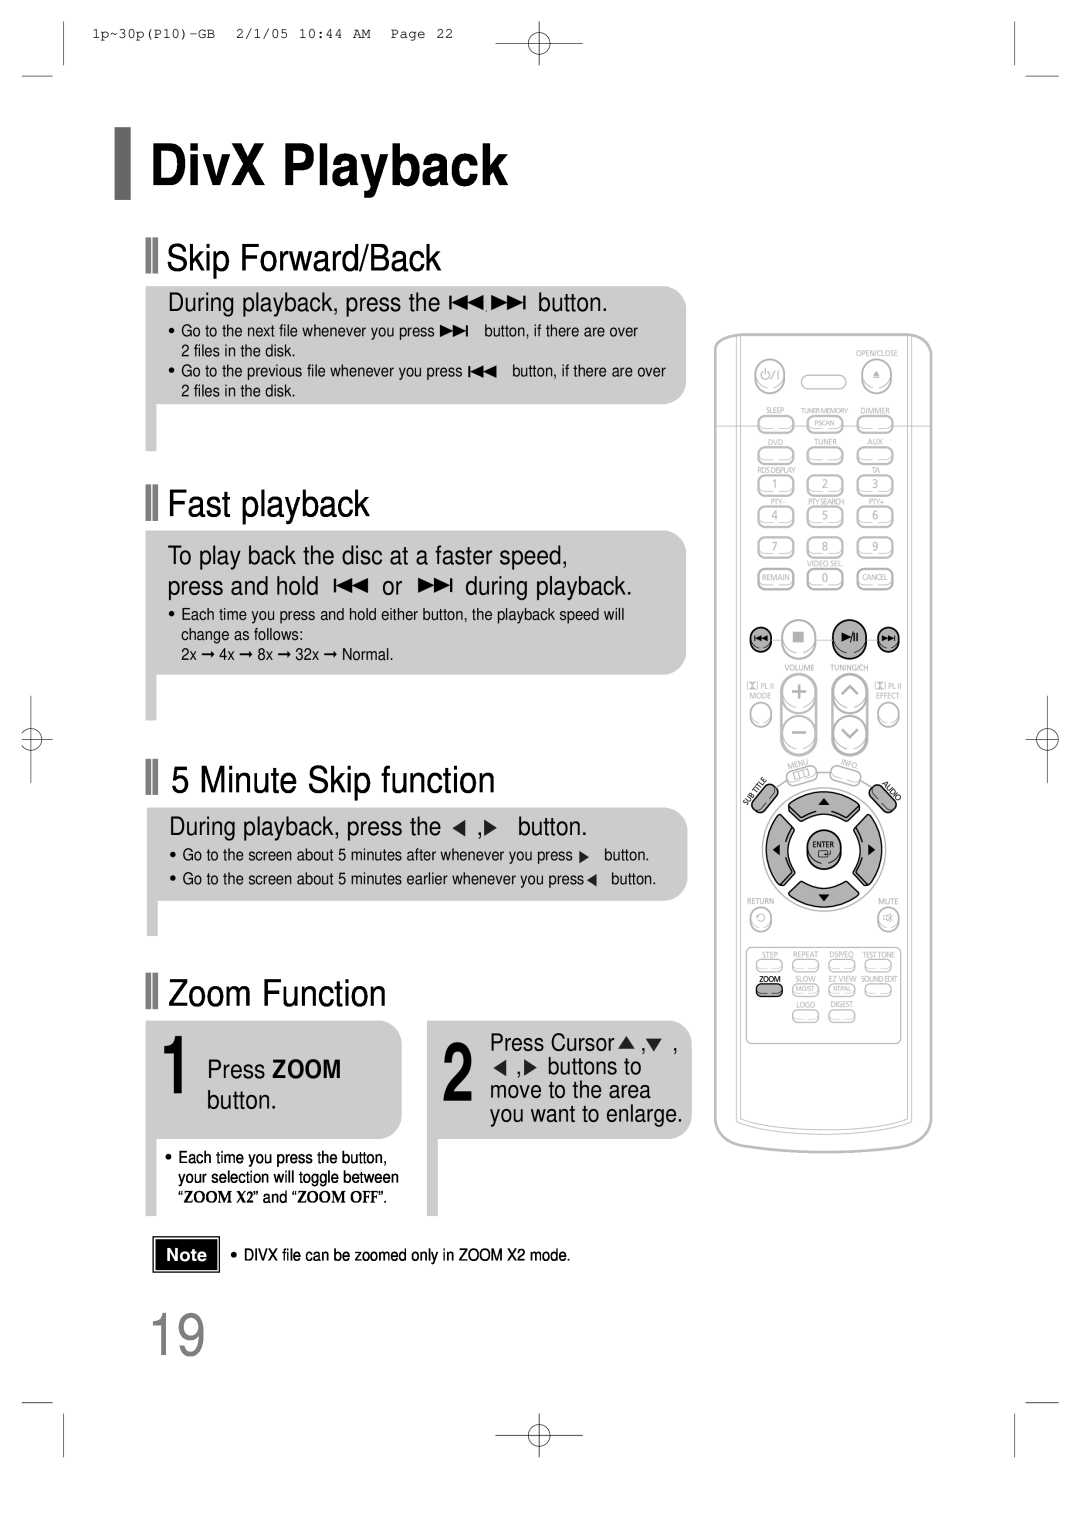 Samsung P10 DivX Playback, Skip Forward/Back, Fast playback, Minute Skip function, Zoom Function, Pressbutton.ZOOM 